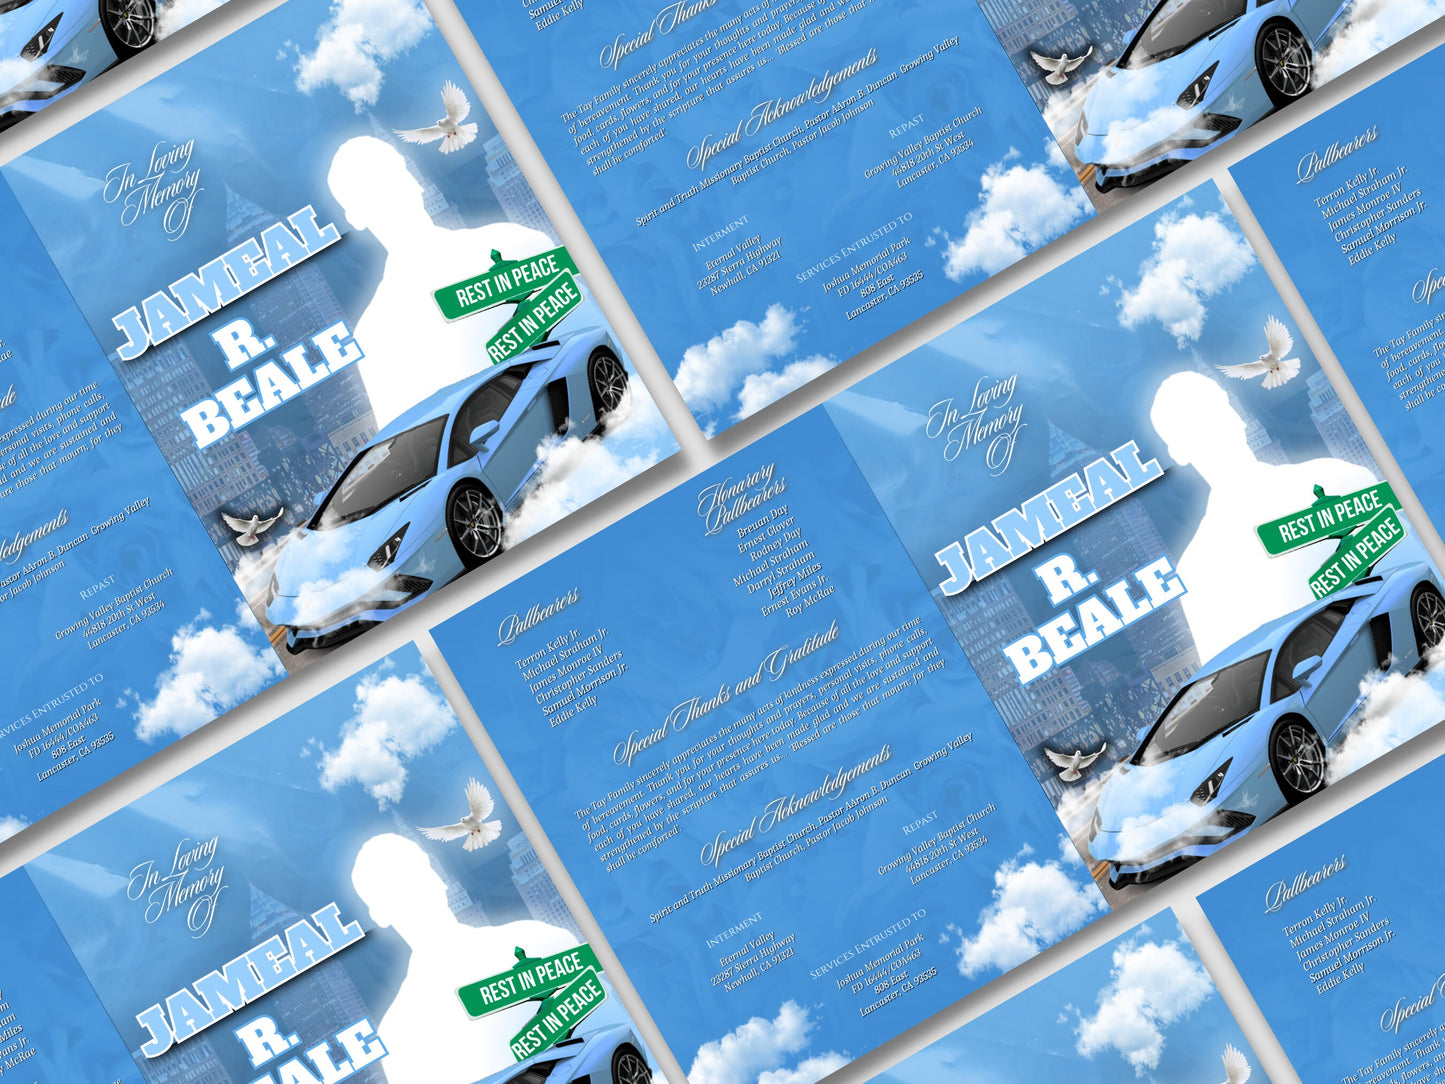 8.5"x11" BOOKLET Memorial program (4 pages)|blue cloud Style Funeral Program |Celebration of Life |Keepsake |Digital Download|Canva Template